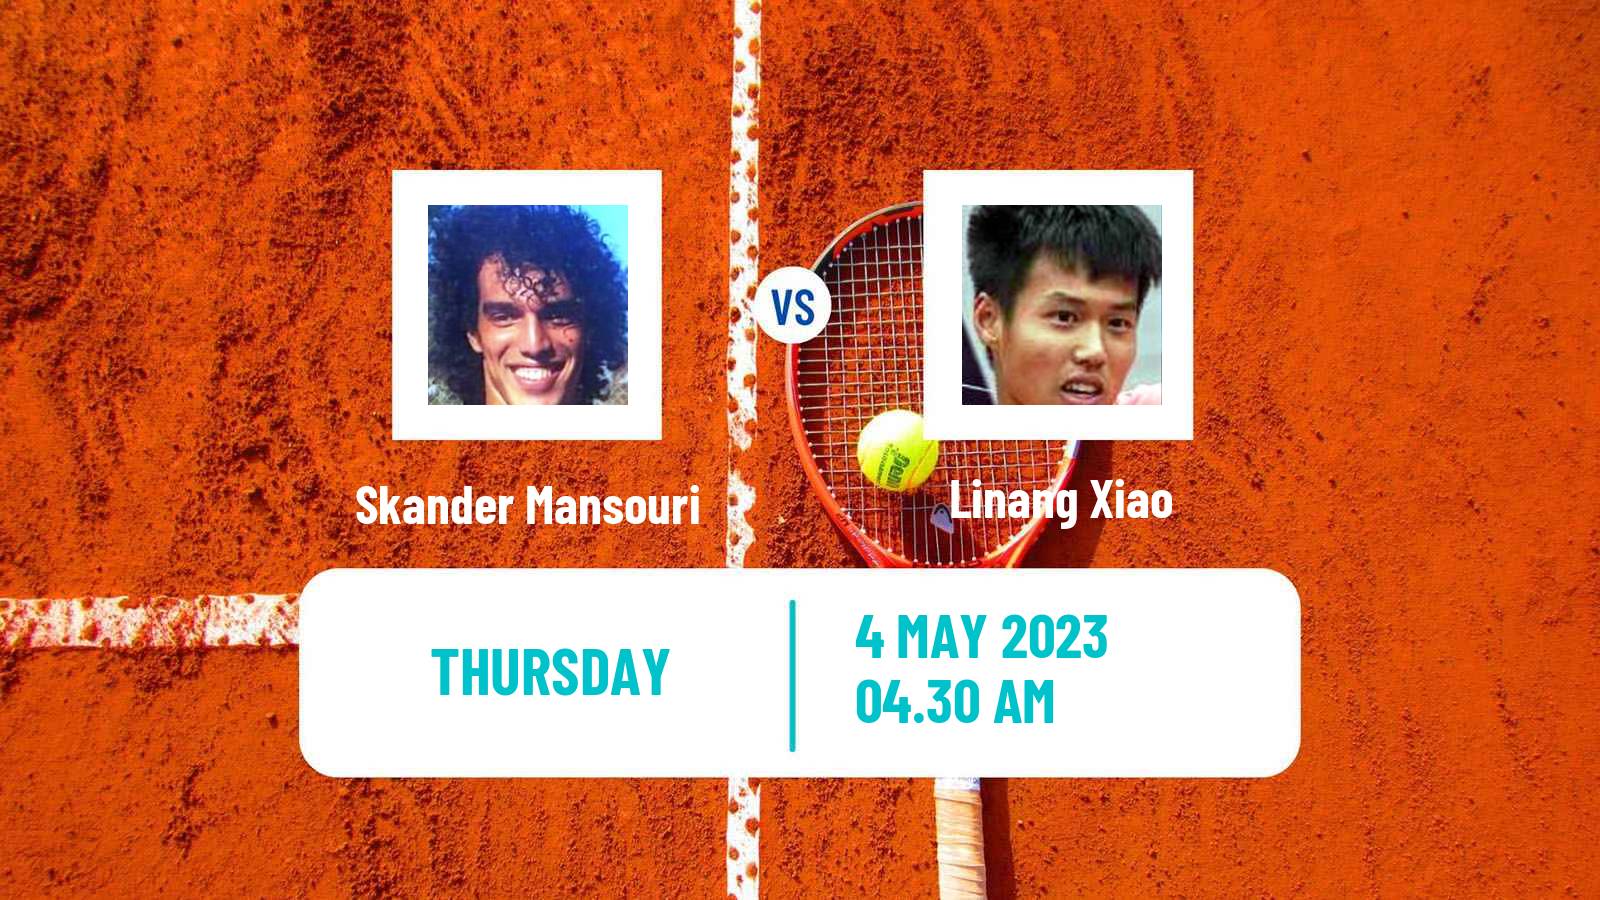 Tennis ITF Tournaments Skander Mansouri - Linang Xiao